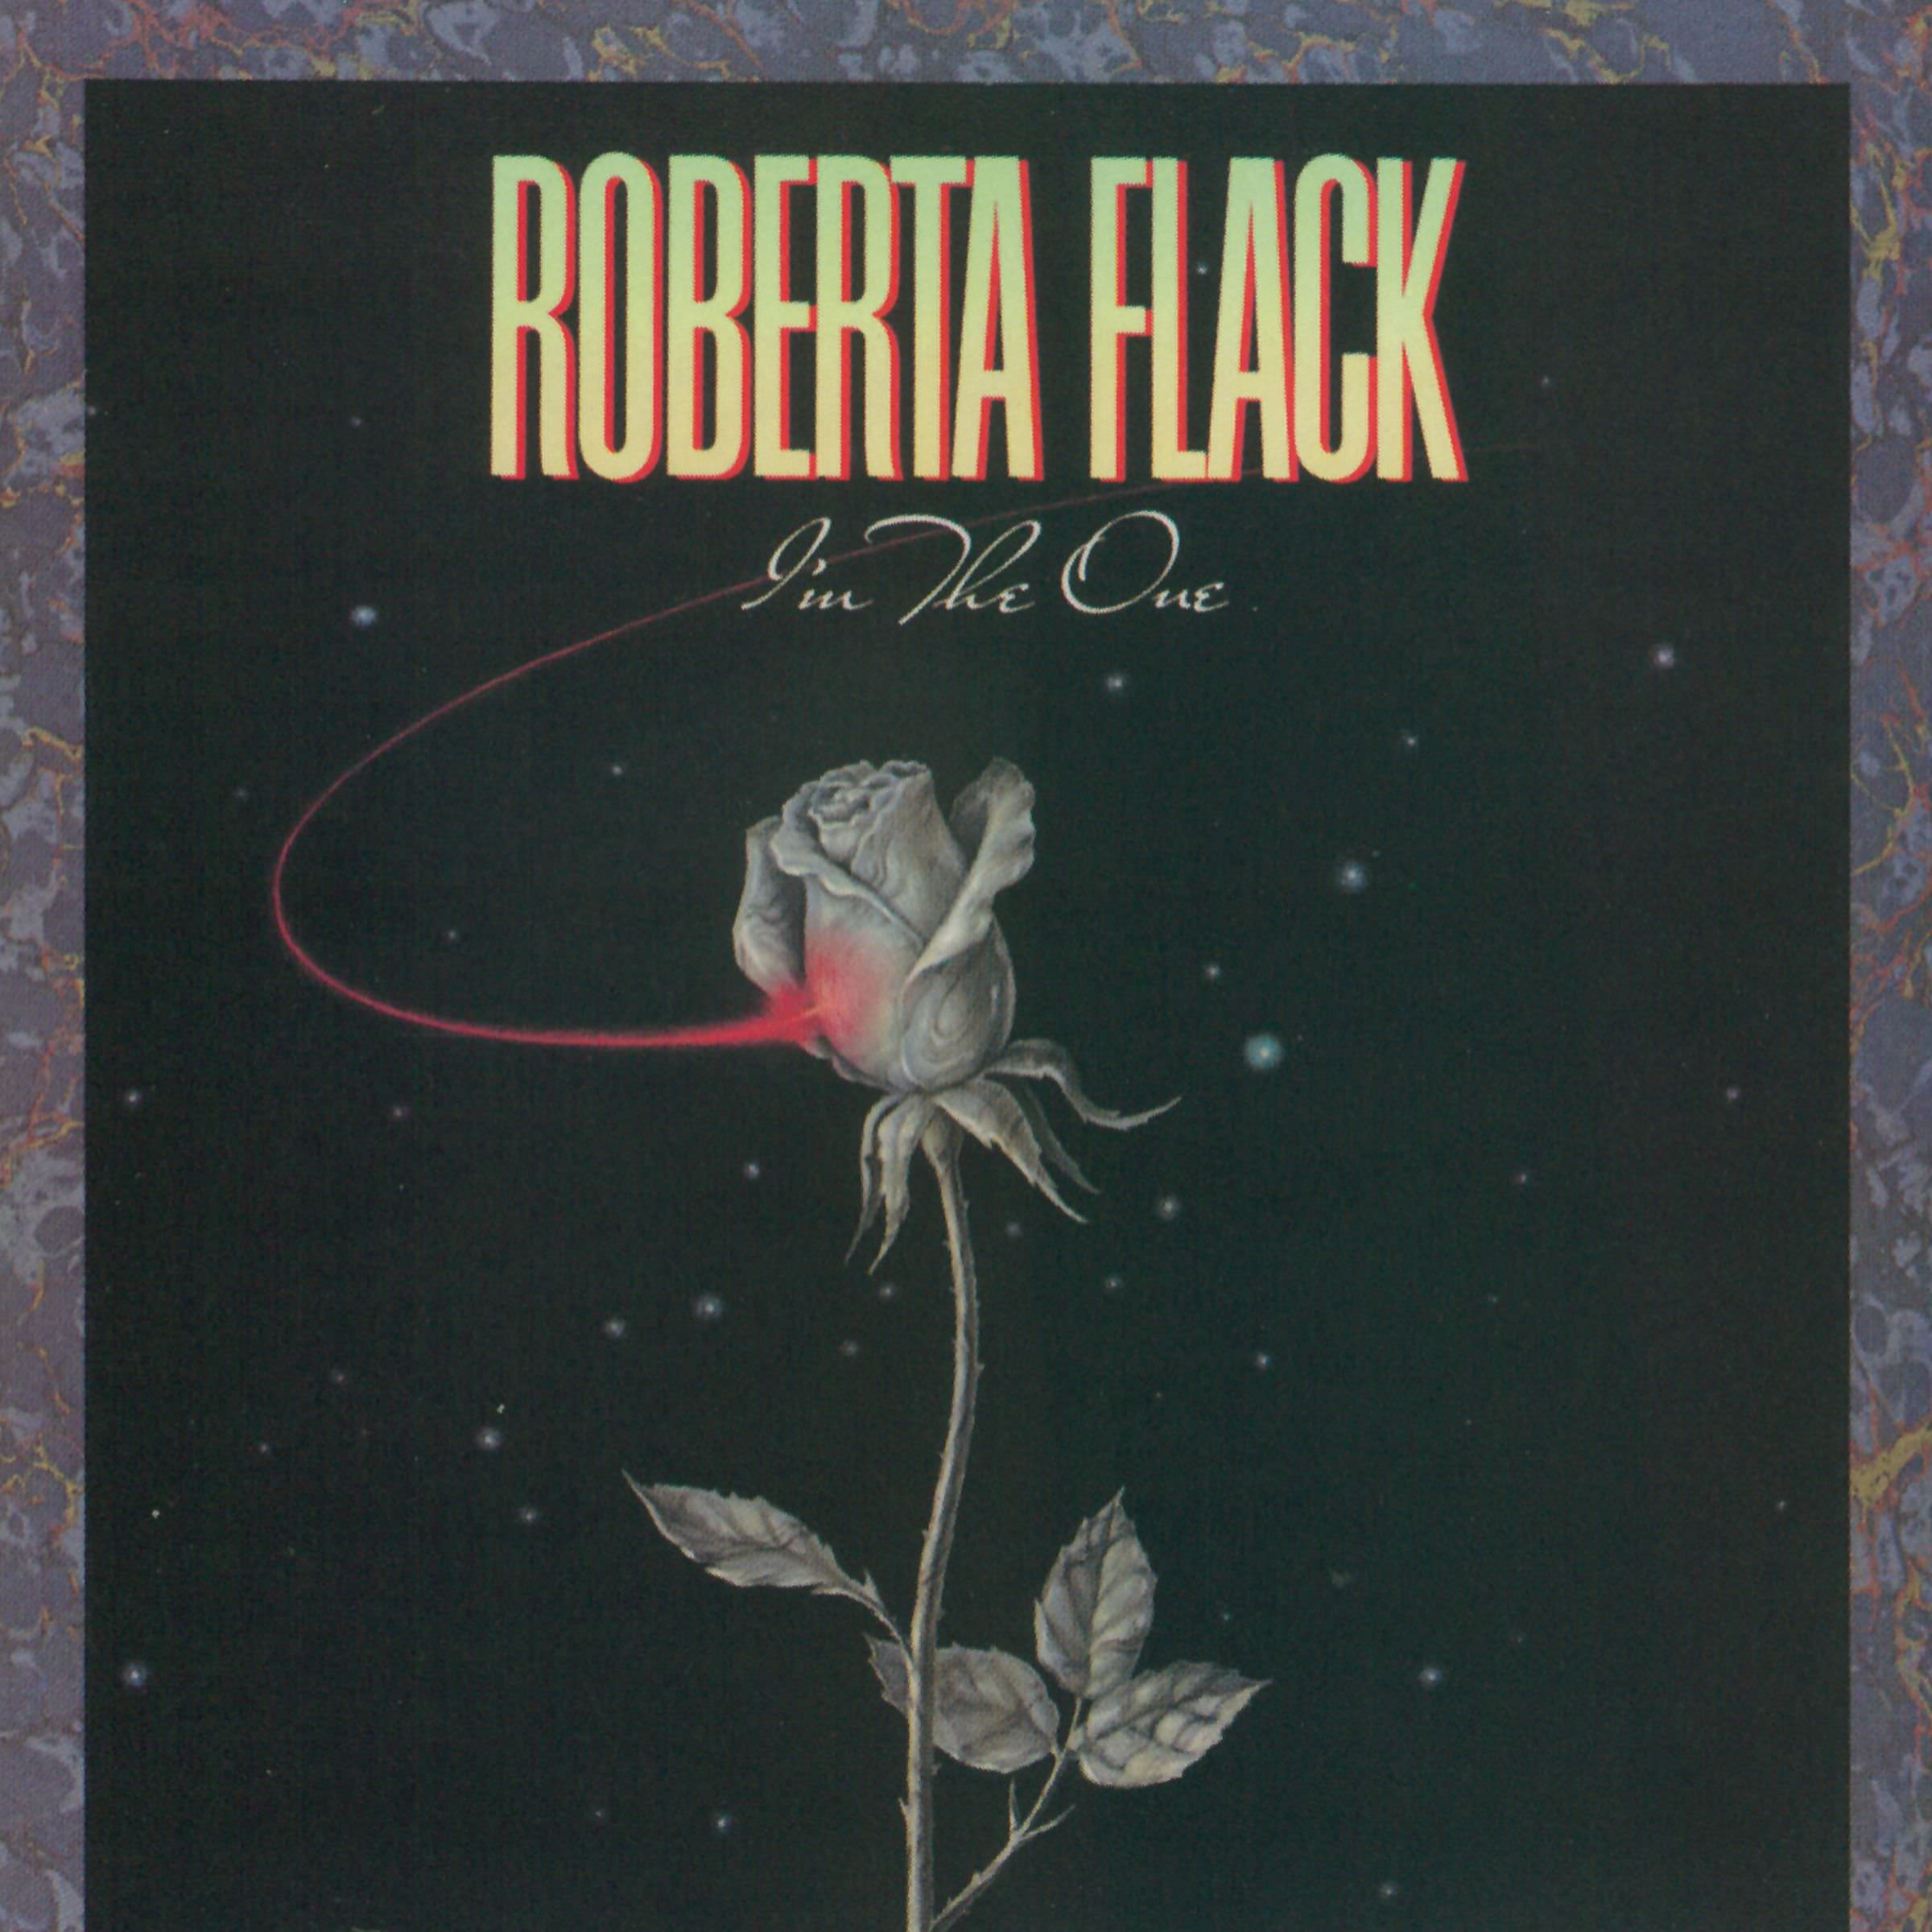 Roberta Flack - I’m The One (1982/2015) [HDTracks FLAC 24bit/192kHz]